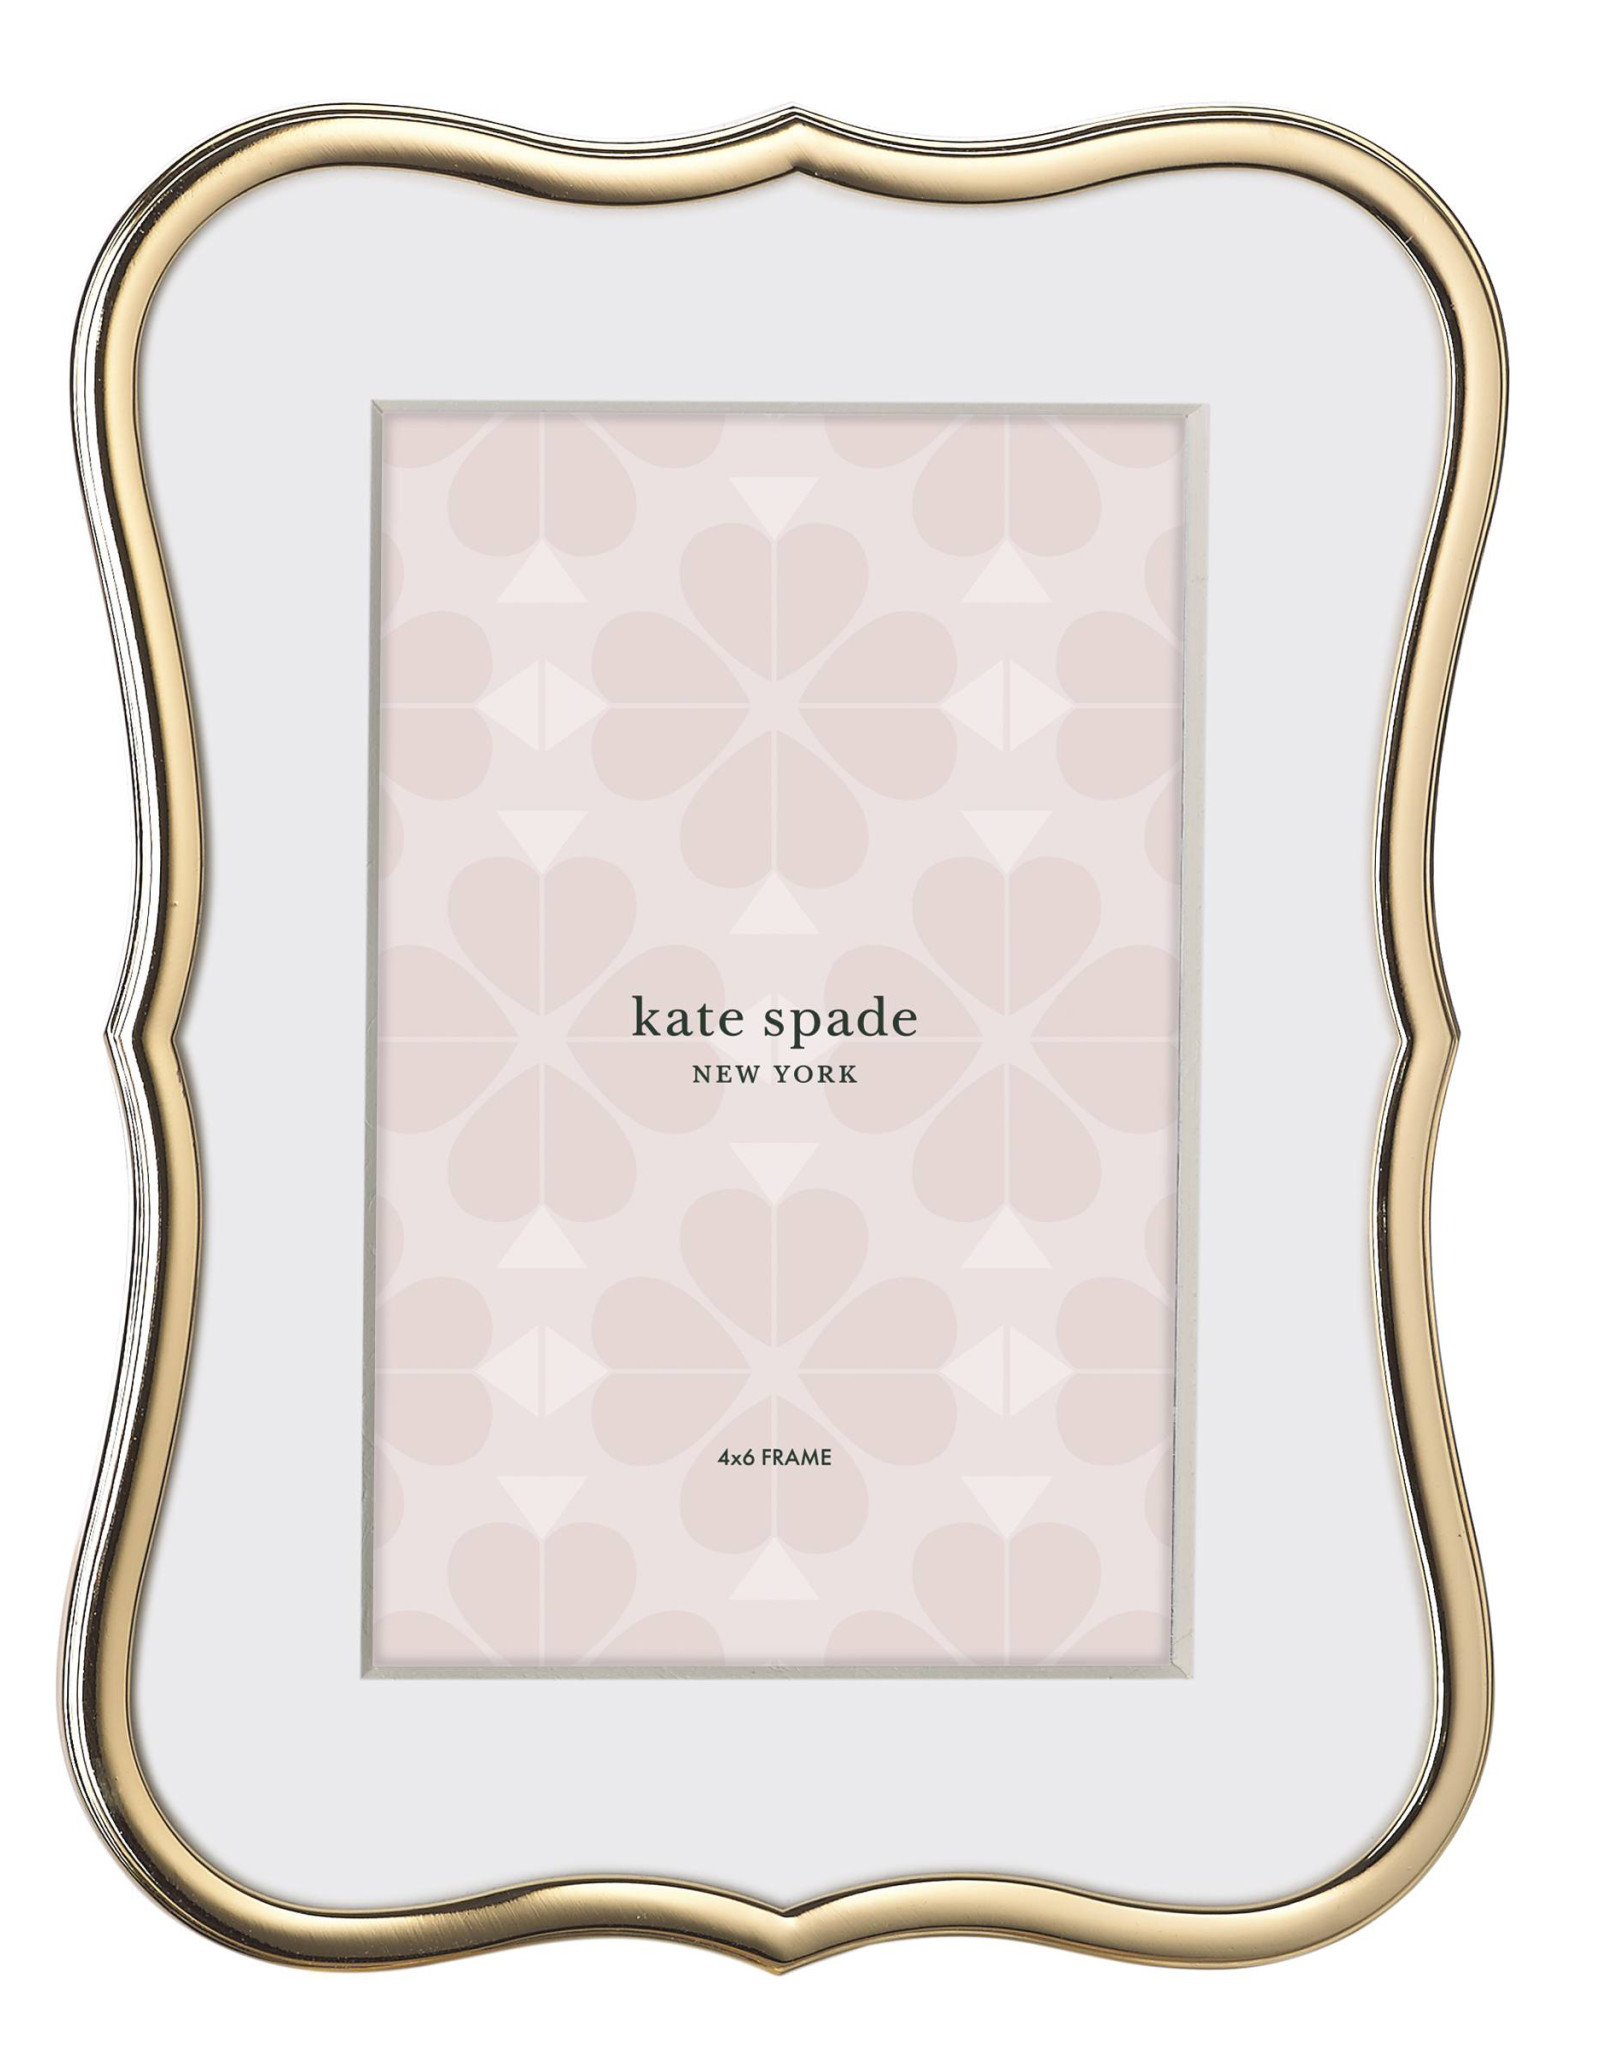 Kate Spade Crown gold frame 4x6